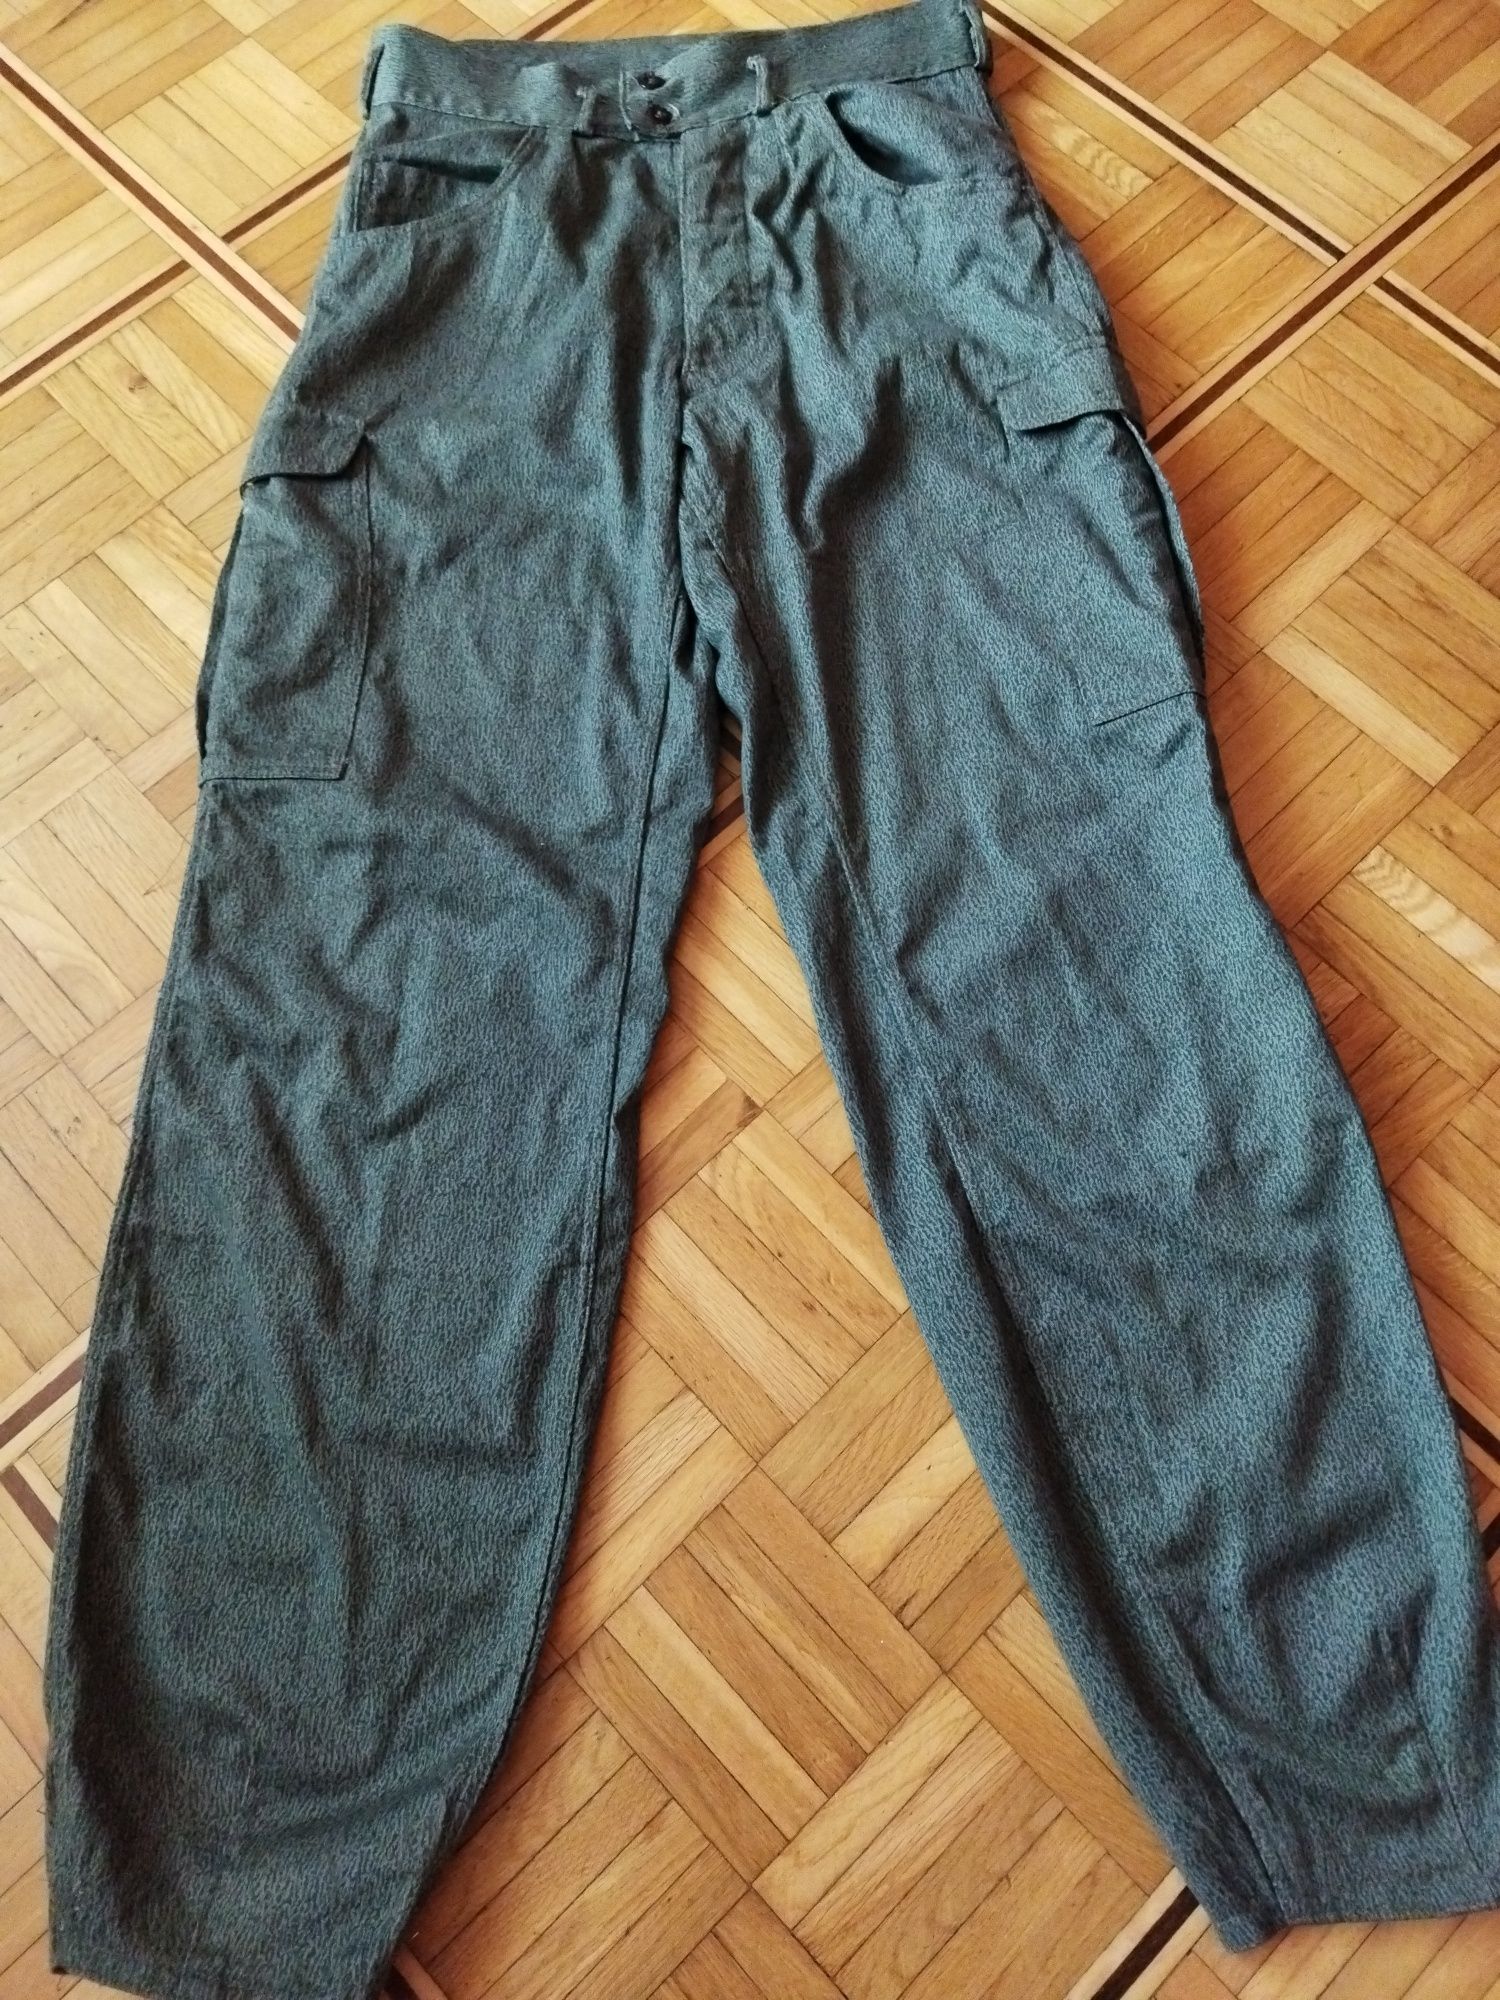 Spodnie wojskowe PRL Vintage. Różne rozmiary.